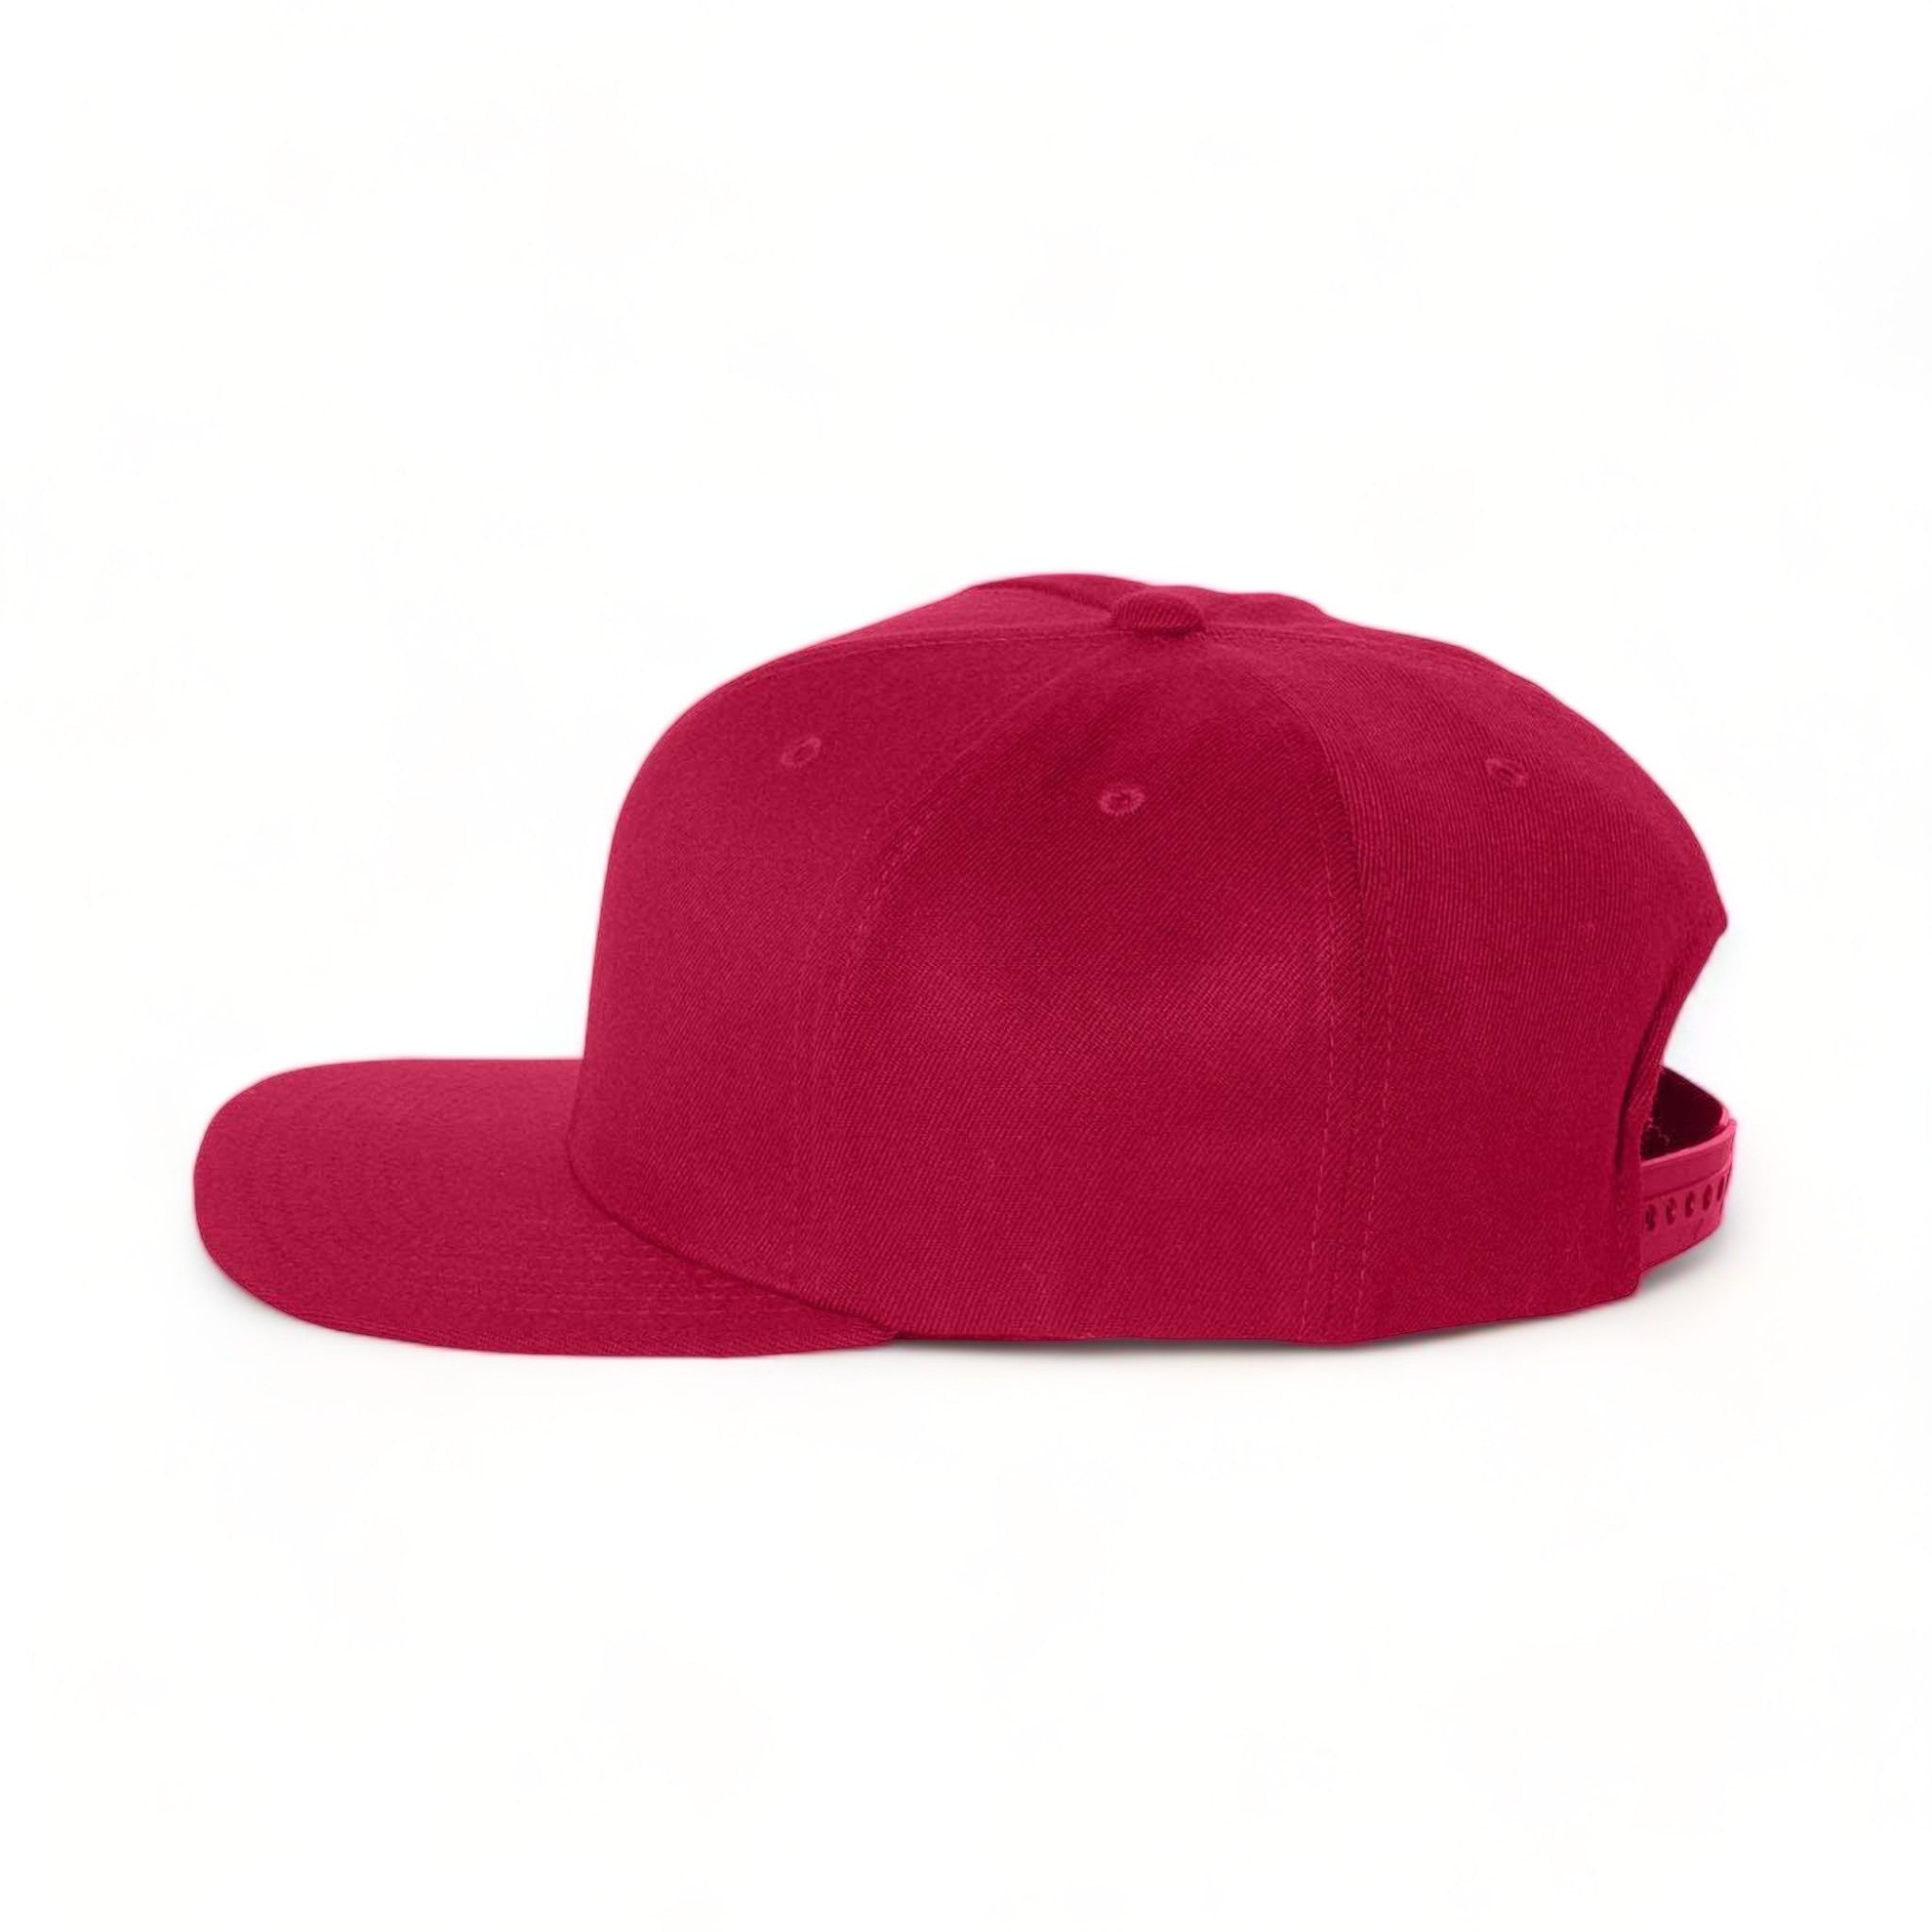 Side view of Flexfit 110F custom hat in red